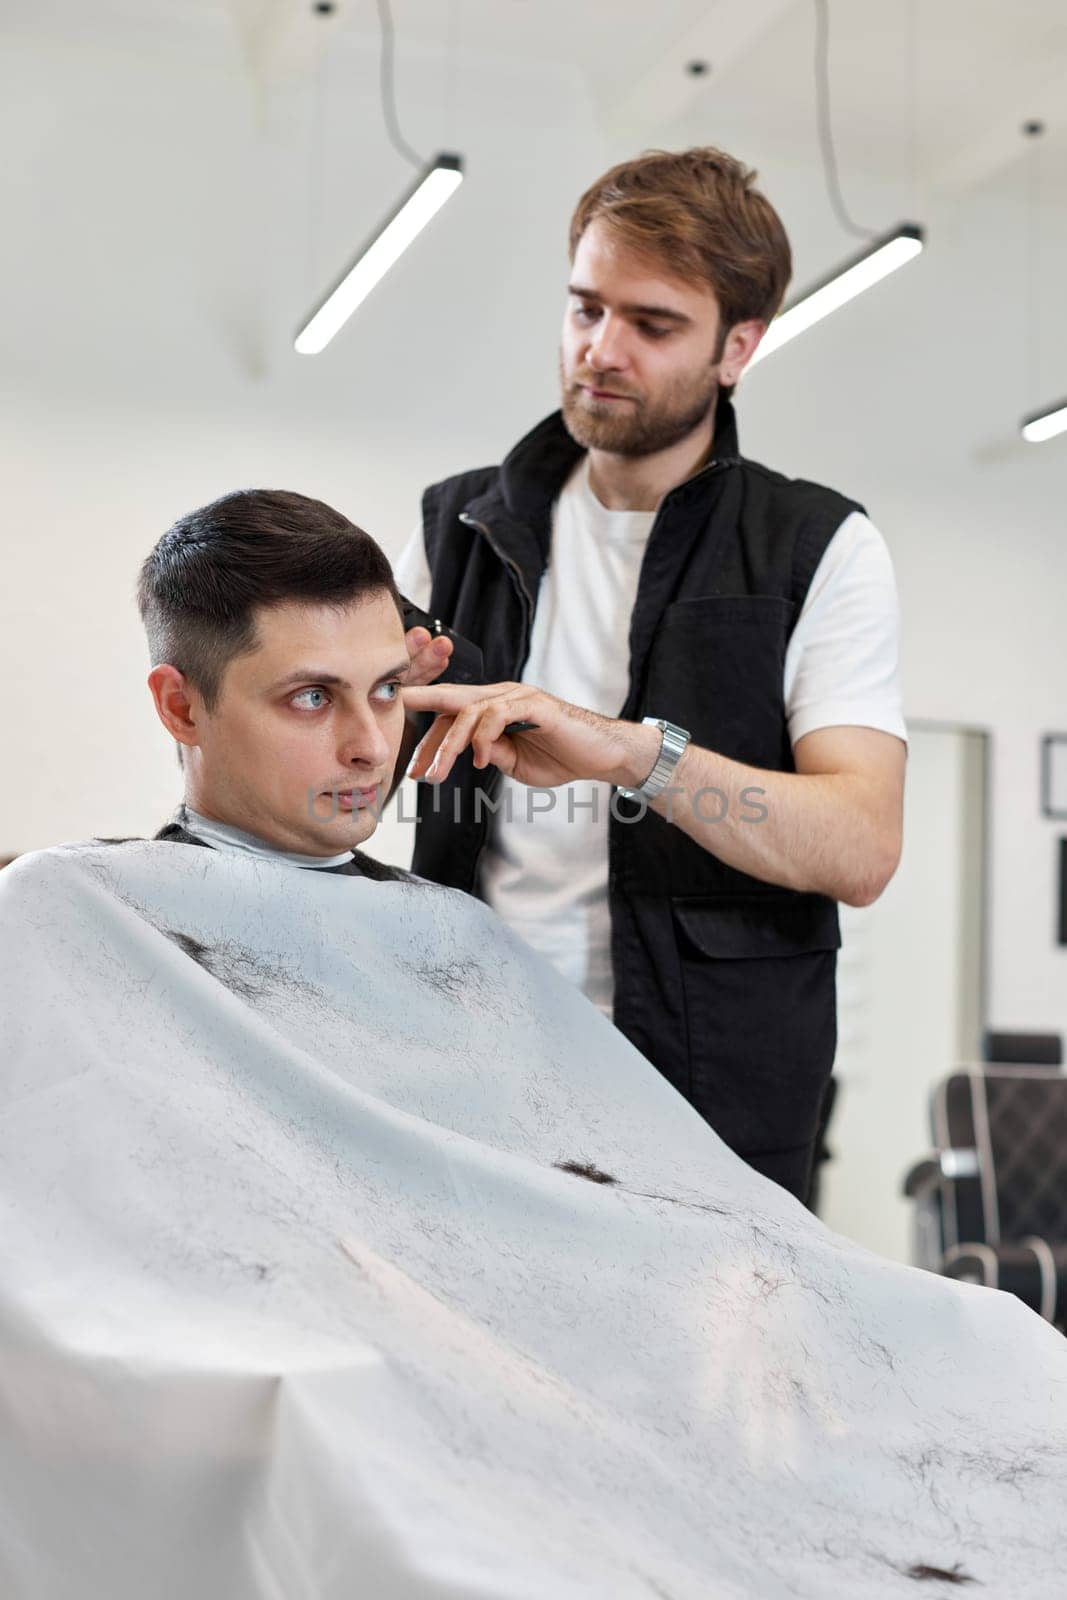 Barber shaving handsome caucasian man in barber shop.